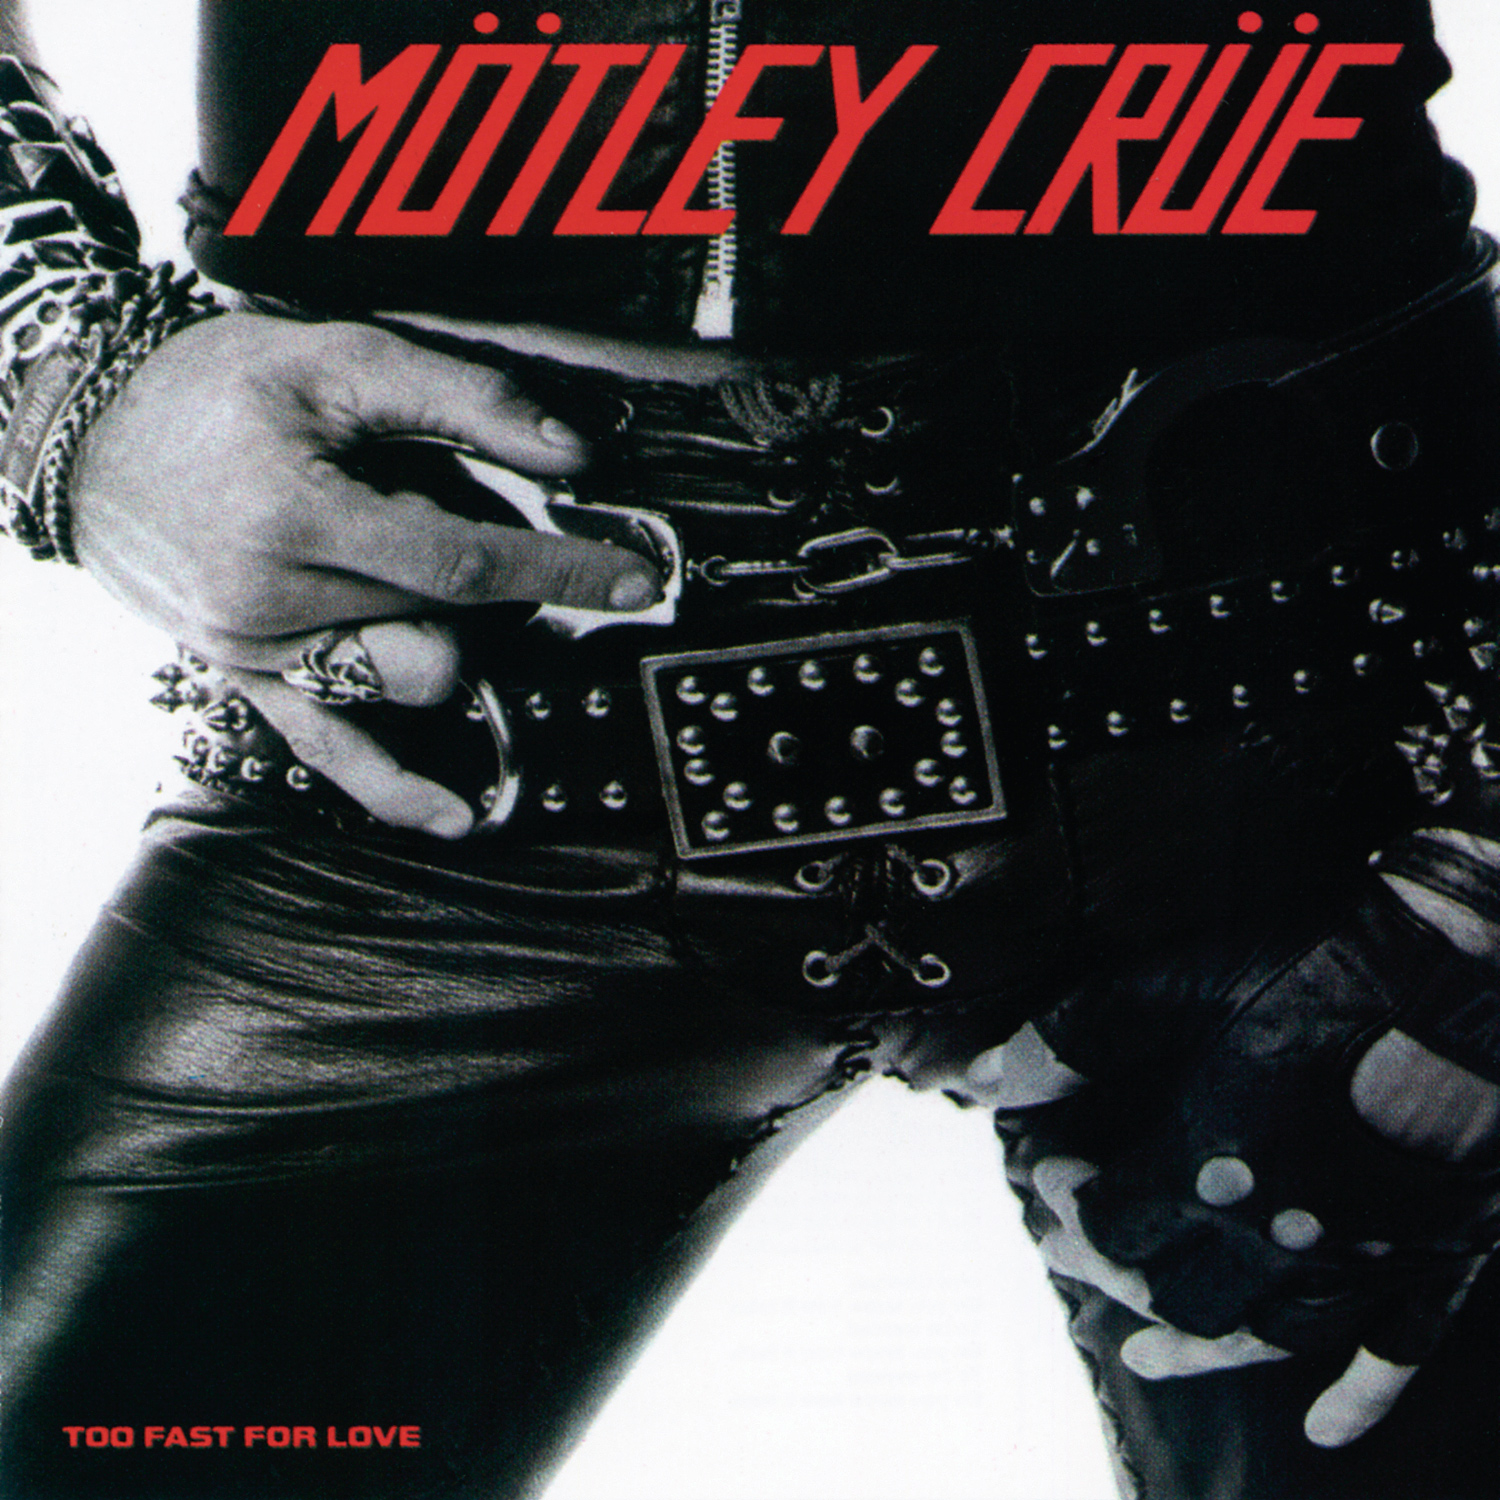 Motley Crue – Too Fast For Love (1981/2008/2018) [HDTracks FLAC 24bit/96kHz]